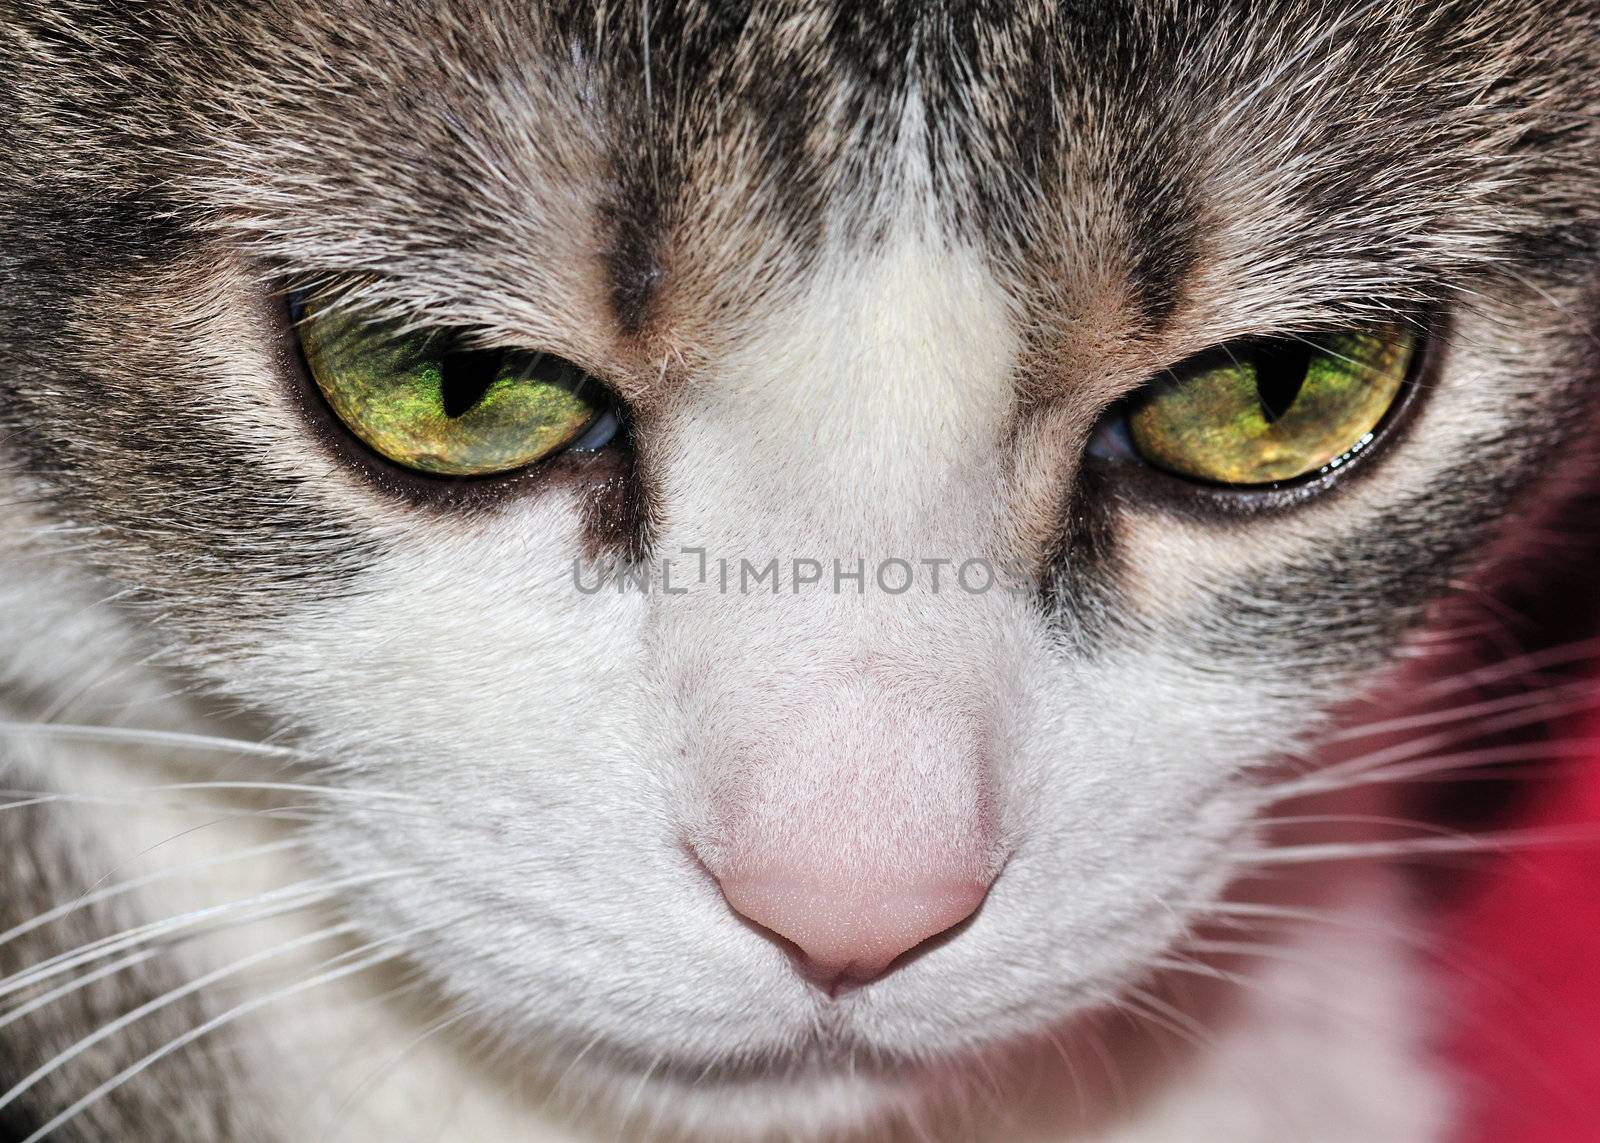 A close-up head shot of a domestic house cat.